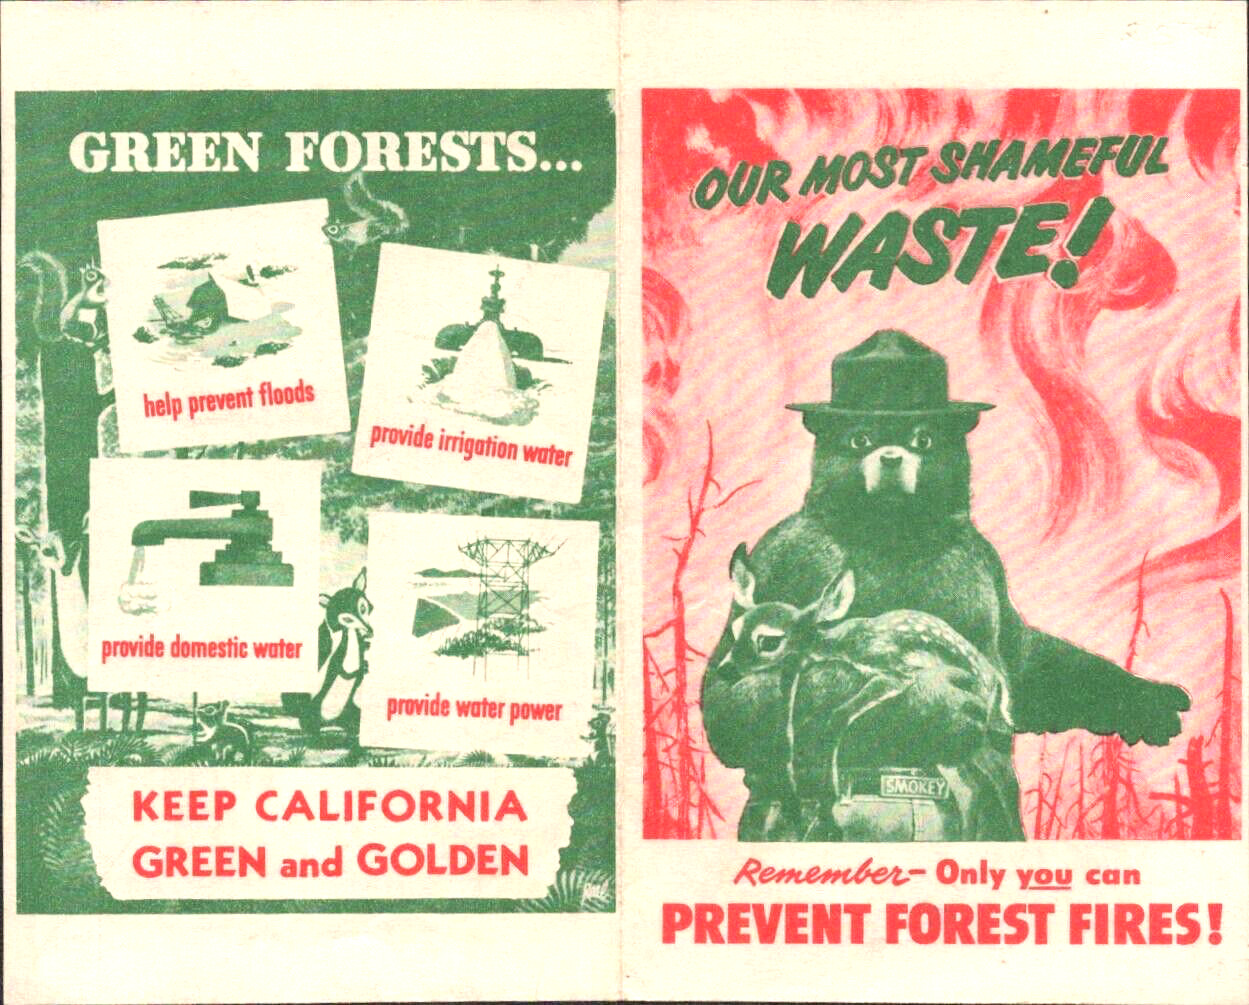 1949 SMOKEY BEAR firefighting pamphlet OUR MOST SHAMEFUL WASTE Sacramento, CA